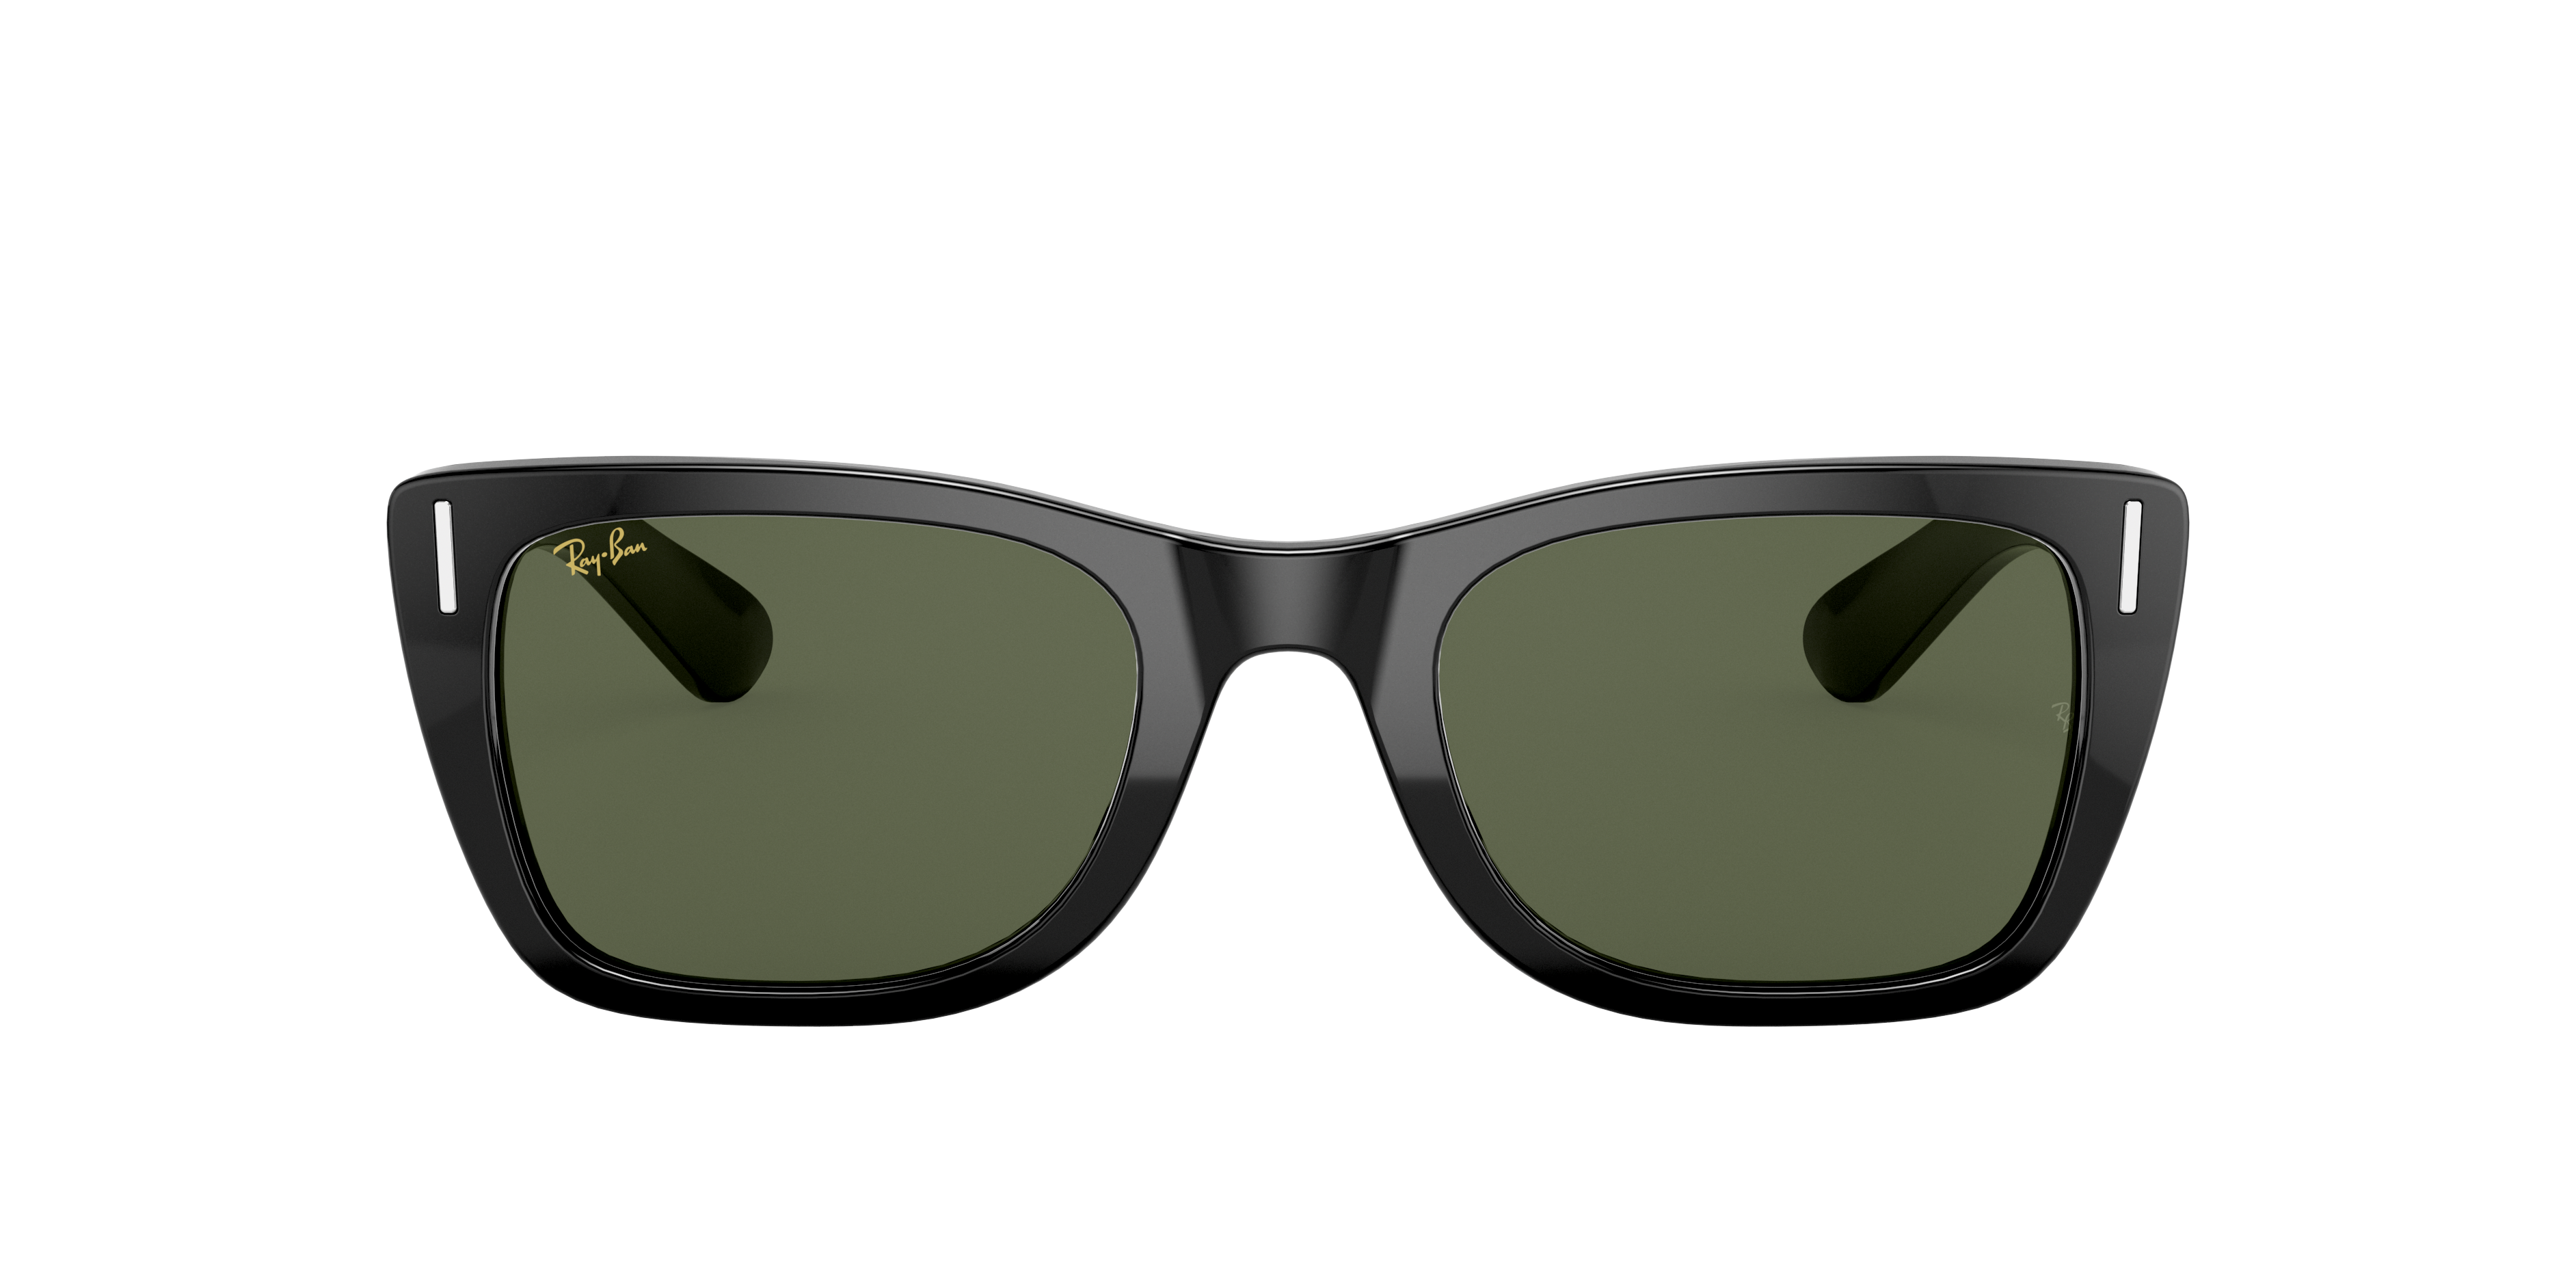 sunglasses similar to wayfarer